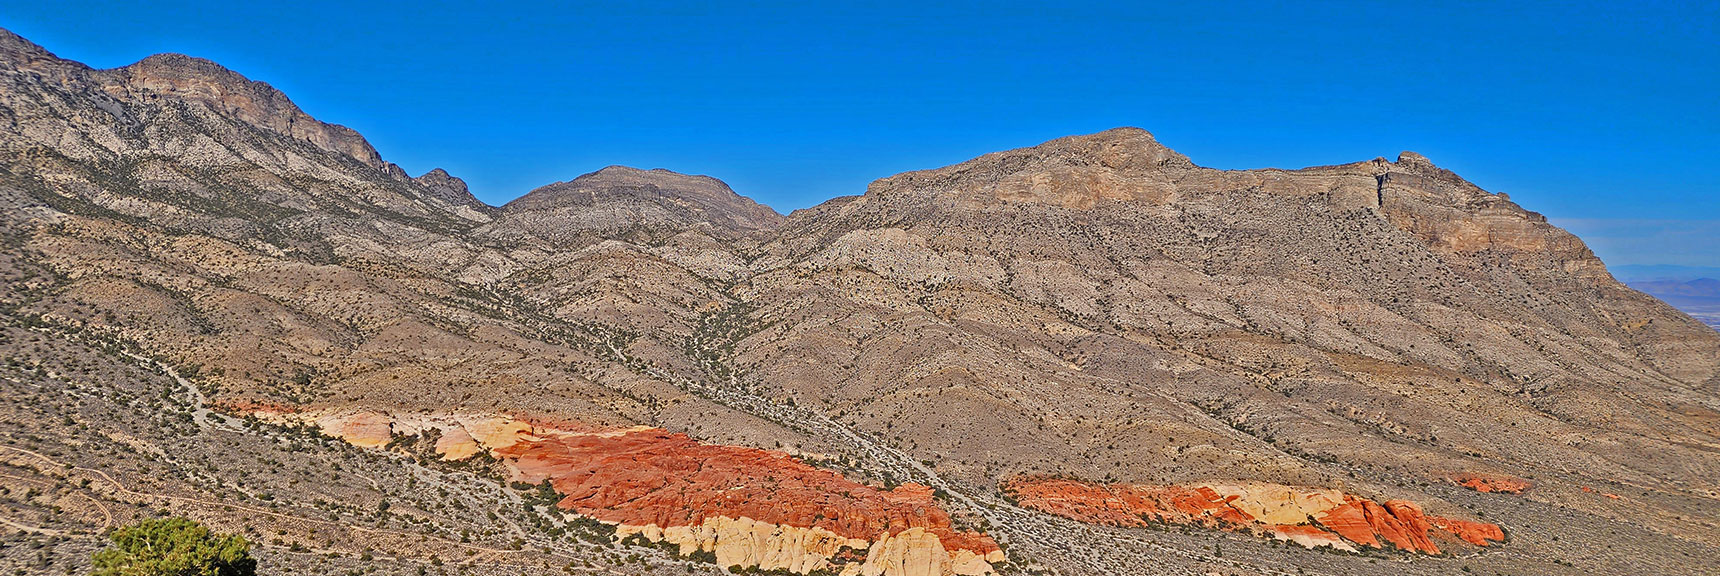 Lower Calico Hills with Damsel Peak (Pincushion Peak) Background | Turtlehead Peak | Red Rock Canyon National Conservation Area, Nevada